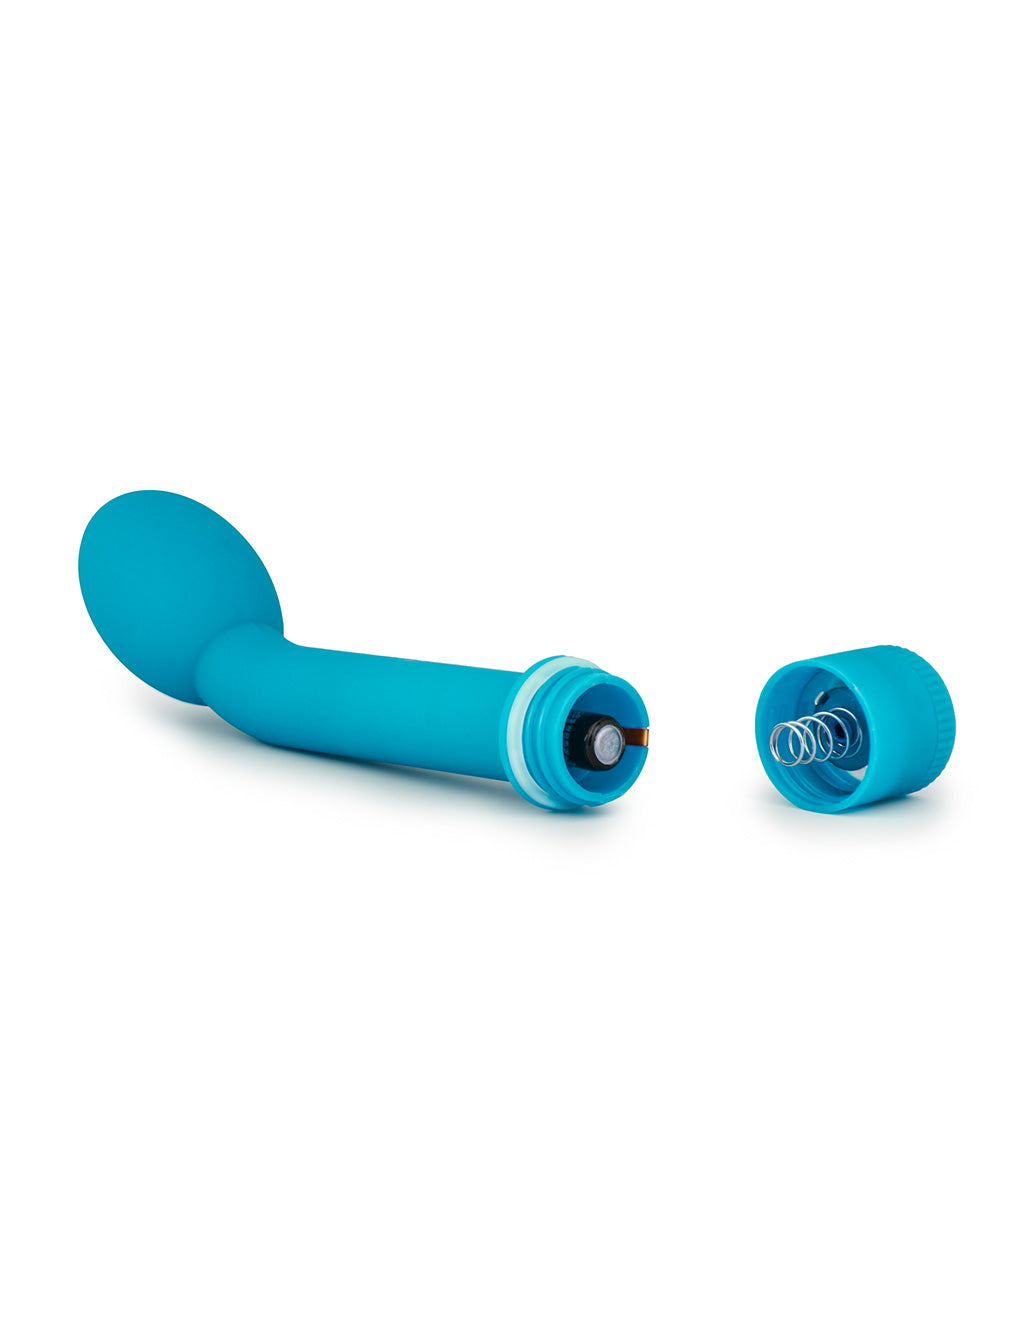 Sexy Things G Slim Petite G-spot Vibrator- Blue- Battery